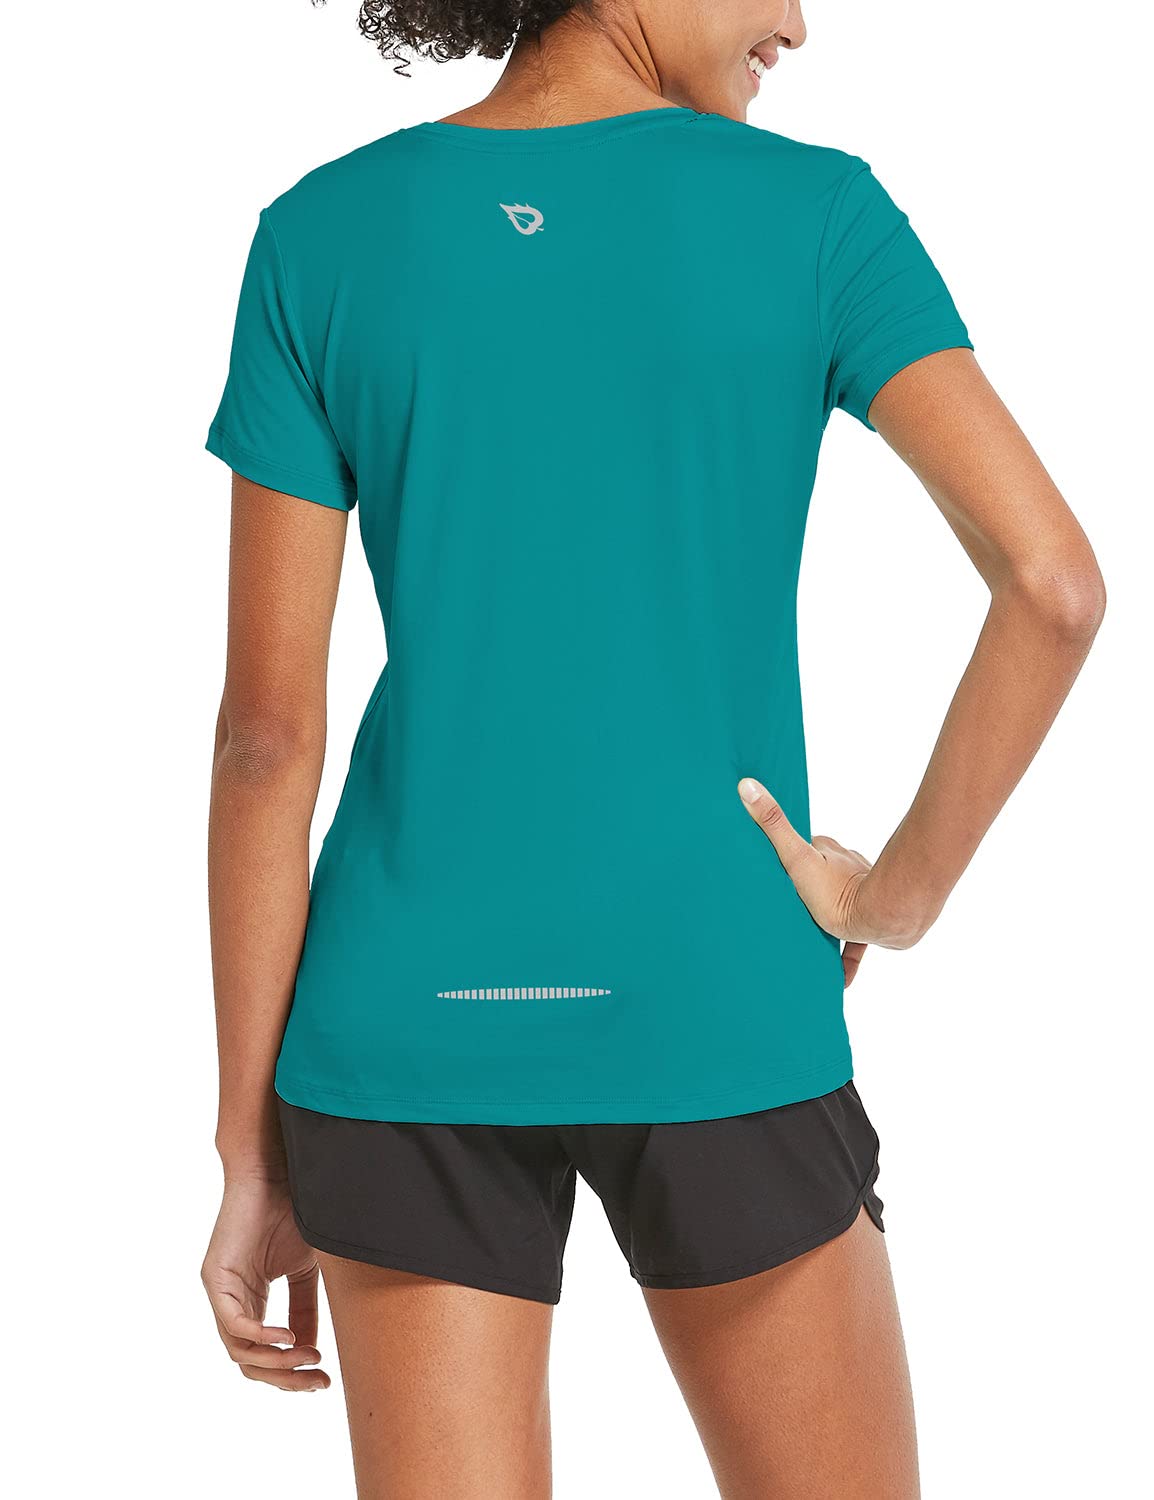 BALEAF Women's Short Sleeve Running Shirts Athletic Lightweight